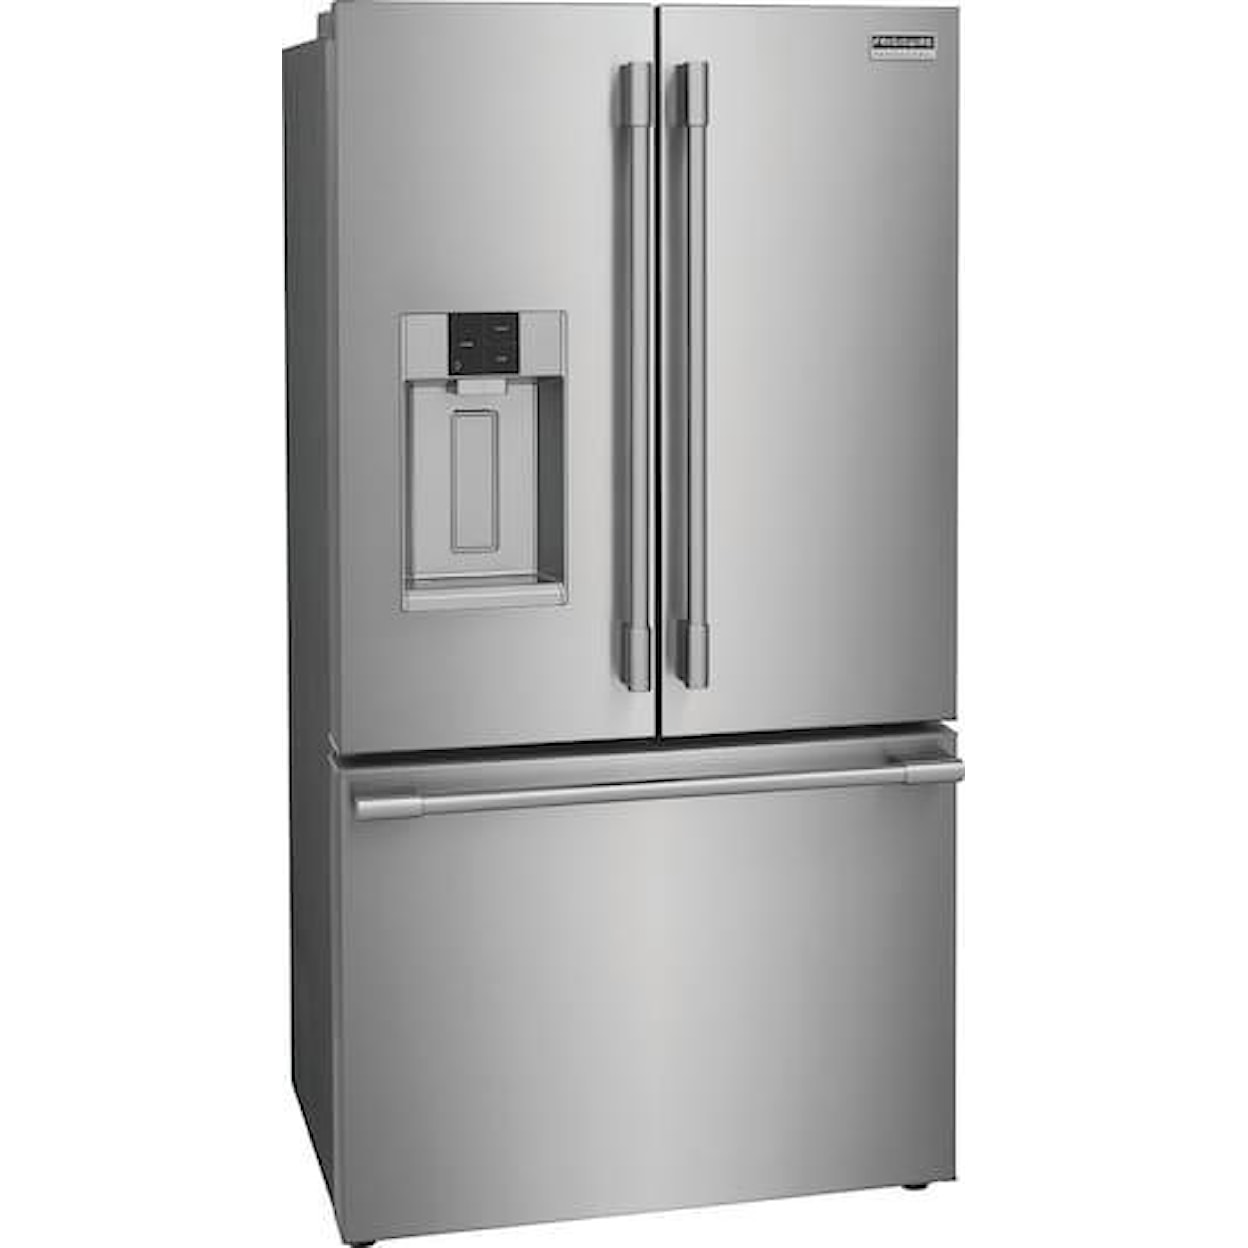 Frigidaire Professional - French Door Refrigerators 22.6 Cu. Ft. French Door Refrigerator